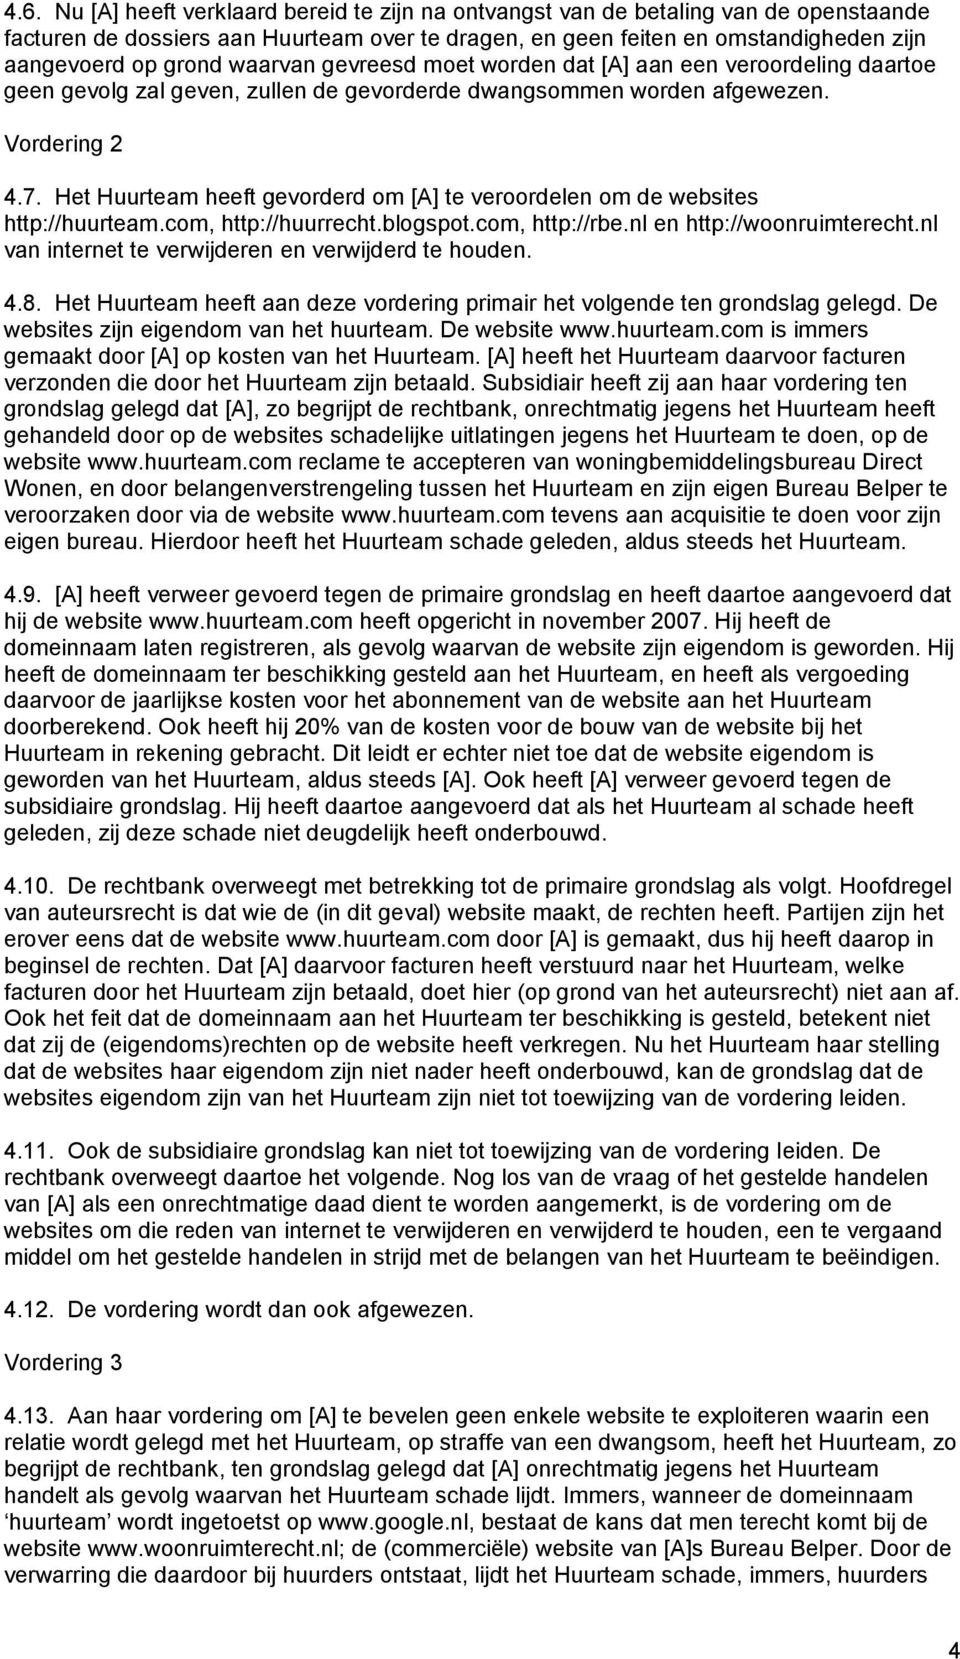 Het Huurteam heeft gevorderd om [A] te veroordelen om de websites http://huurteam.com, http://huurrecht.blogspot.com, http://rbe.nl en http://woonruimterecht.